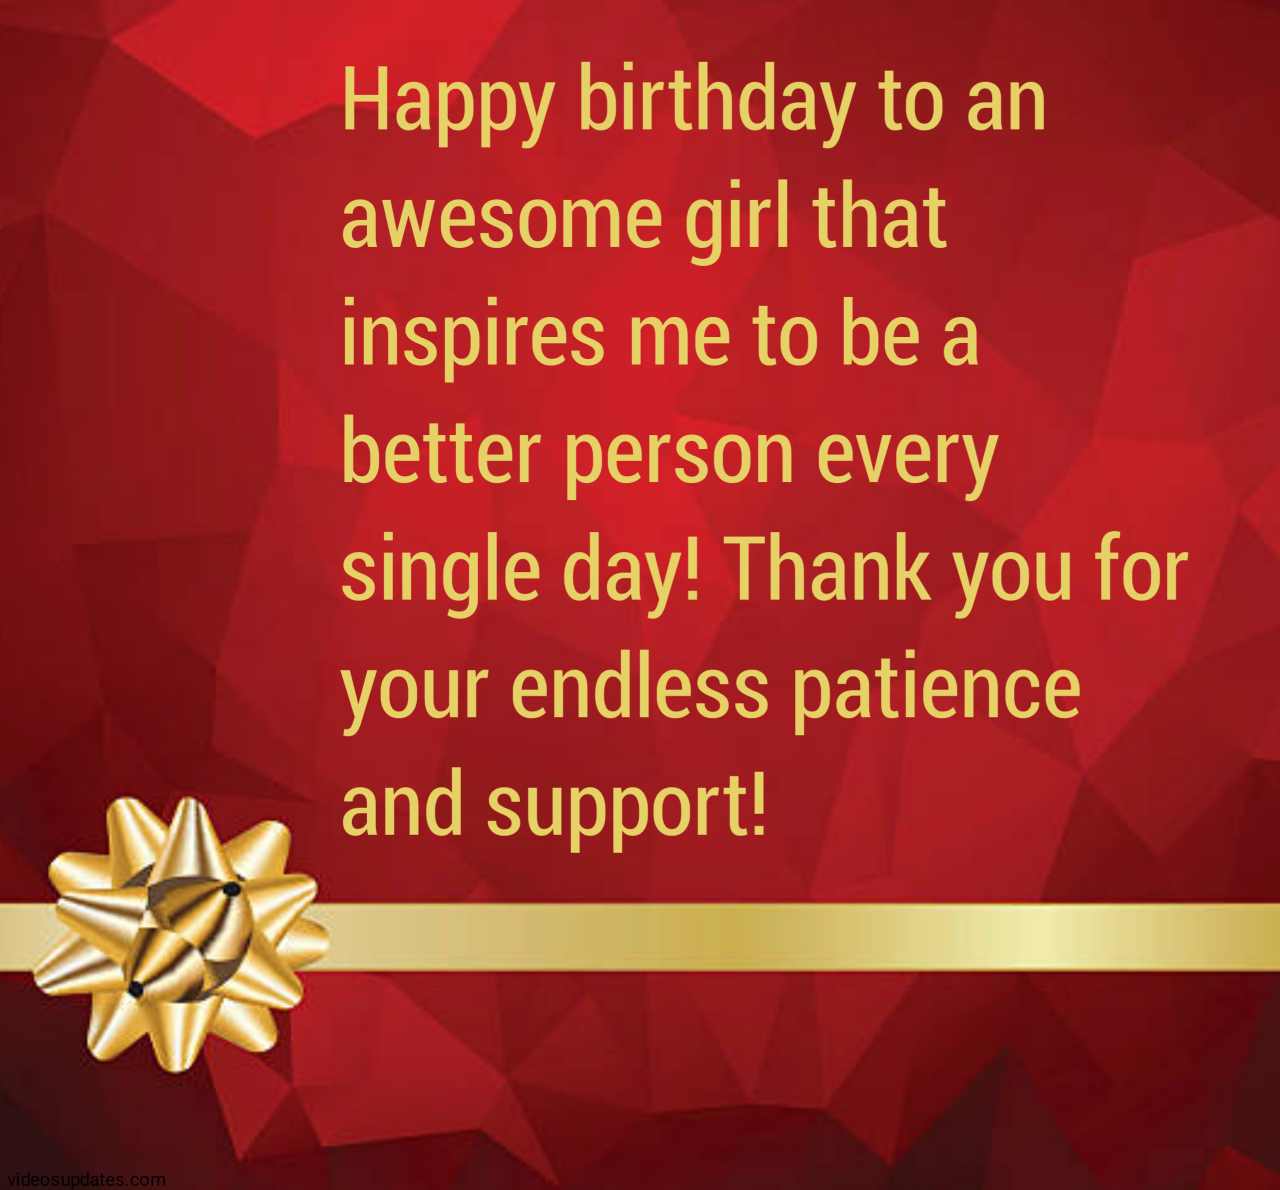 https://videosupdates.com/birthday-wishes-for-friend-girl/